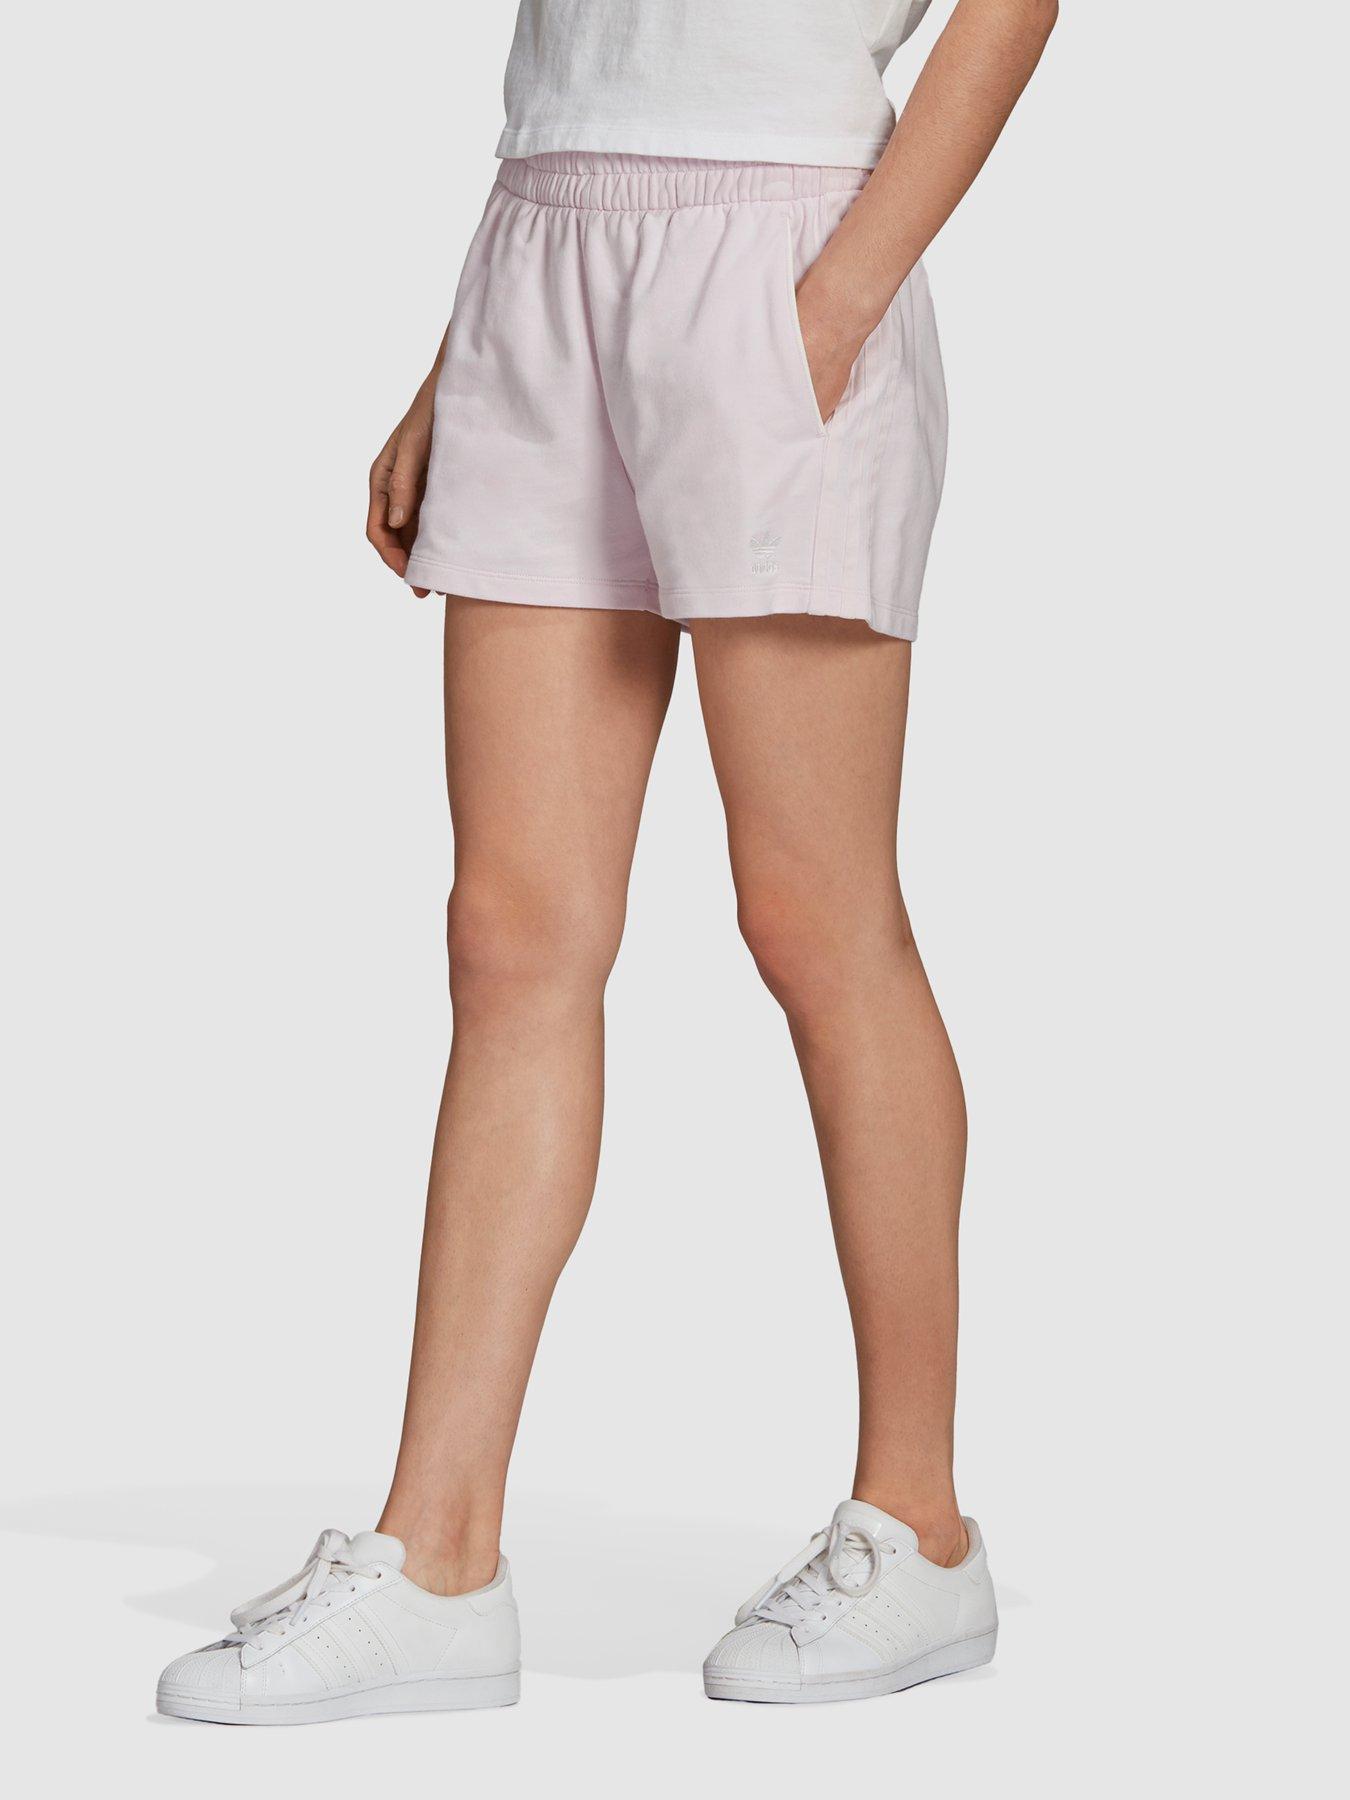  Tennis-Luxe 3 Stripes Shorts - Light Pink